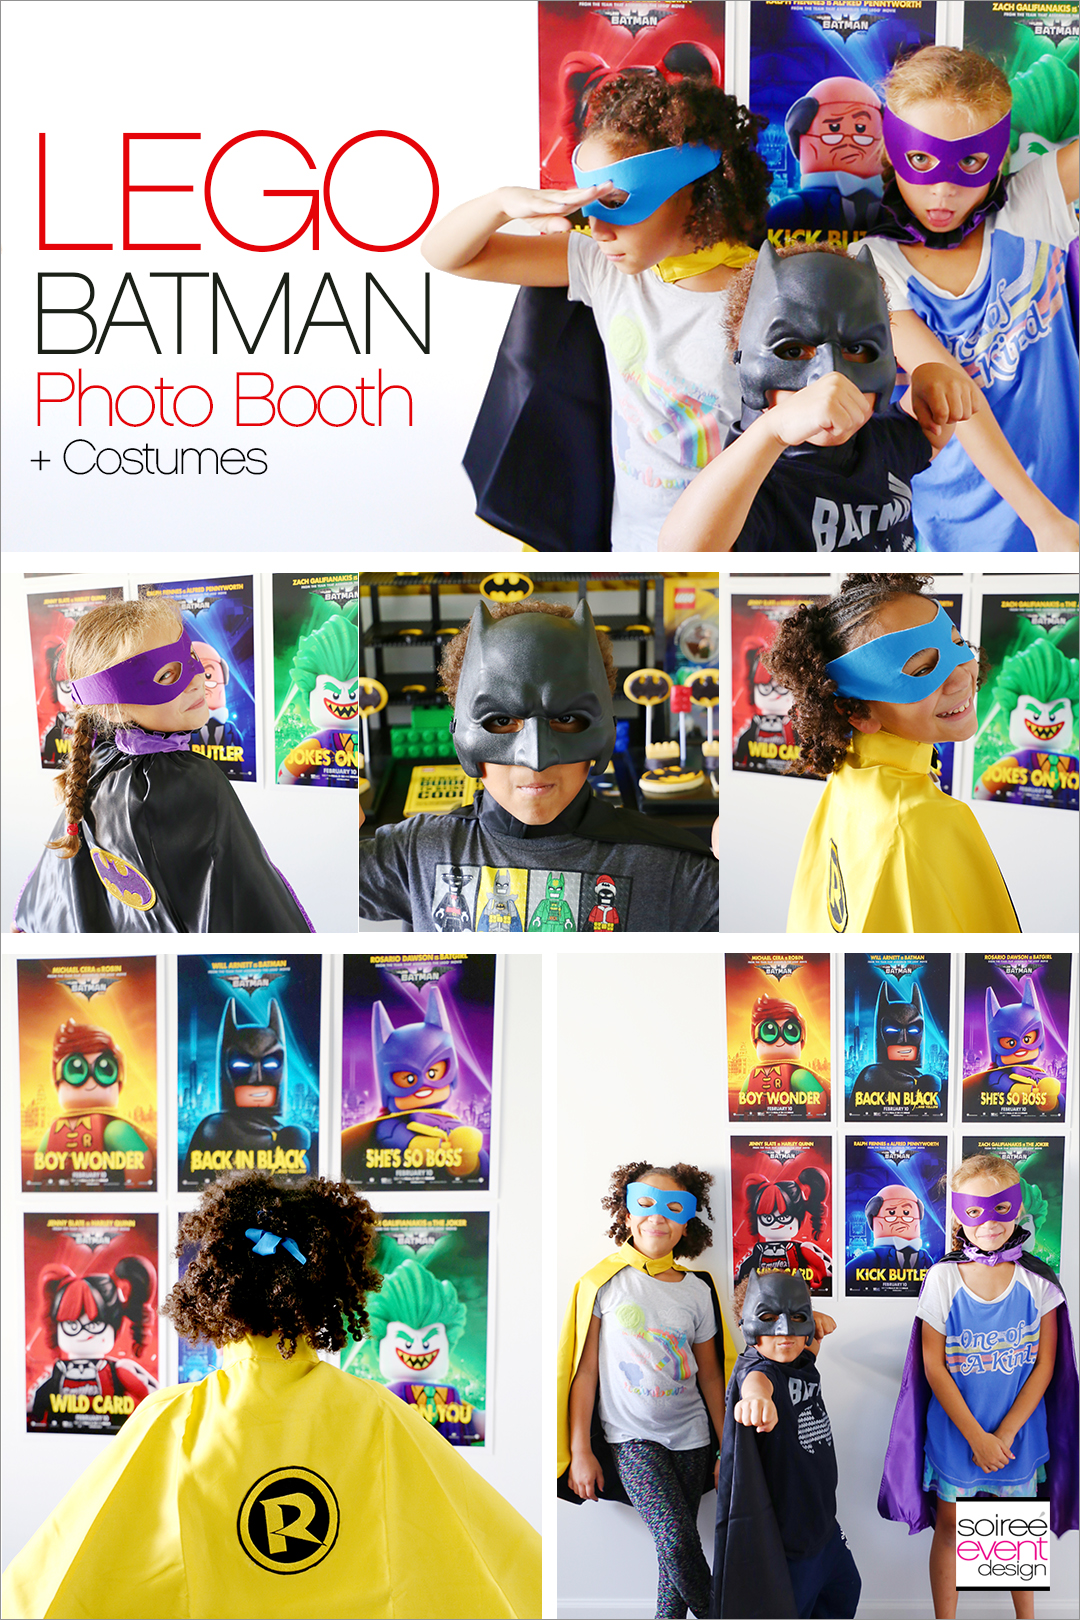 Lego Batman Party Ideas - Batman Photo Booth - Soiree Event Design